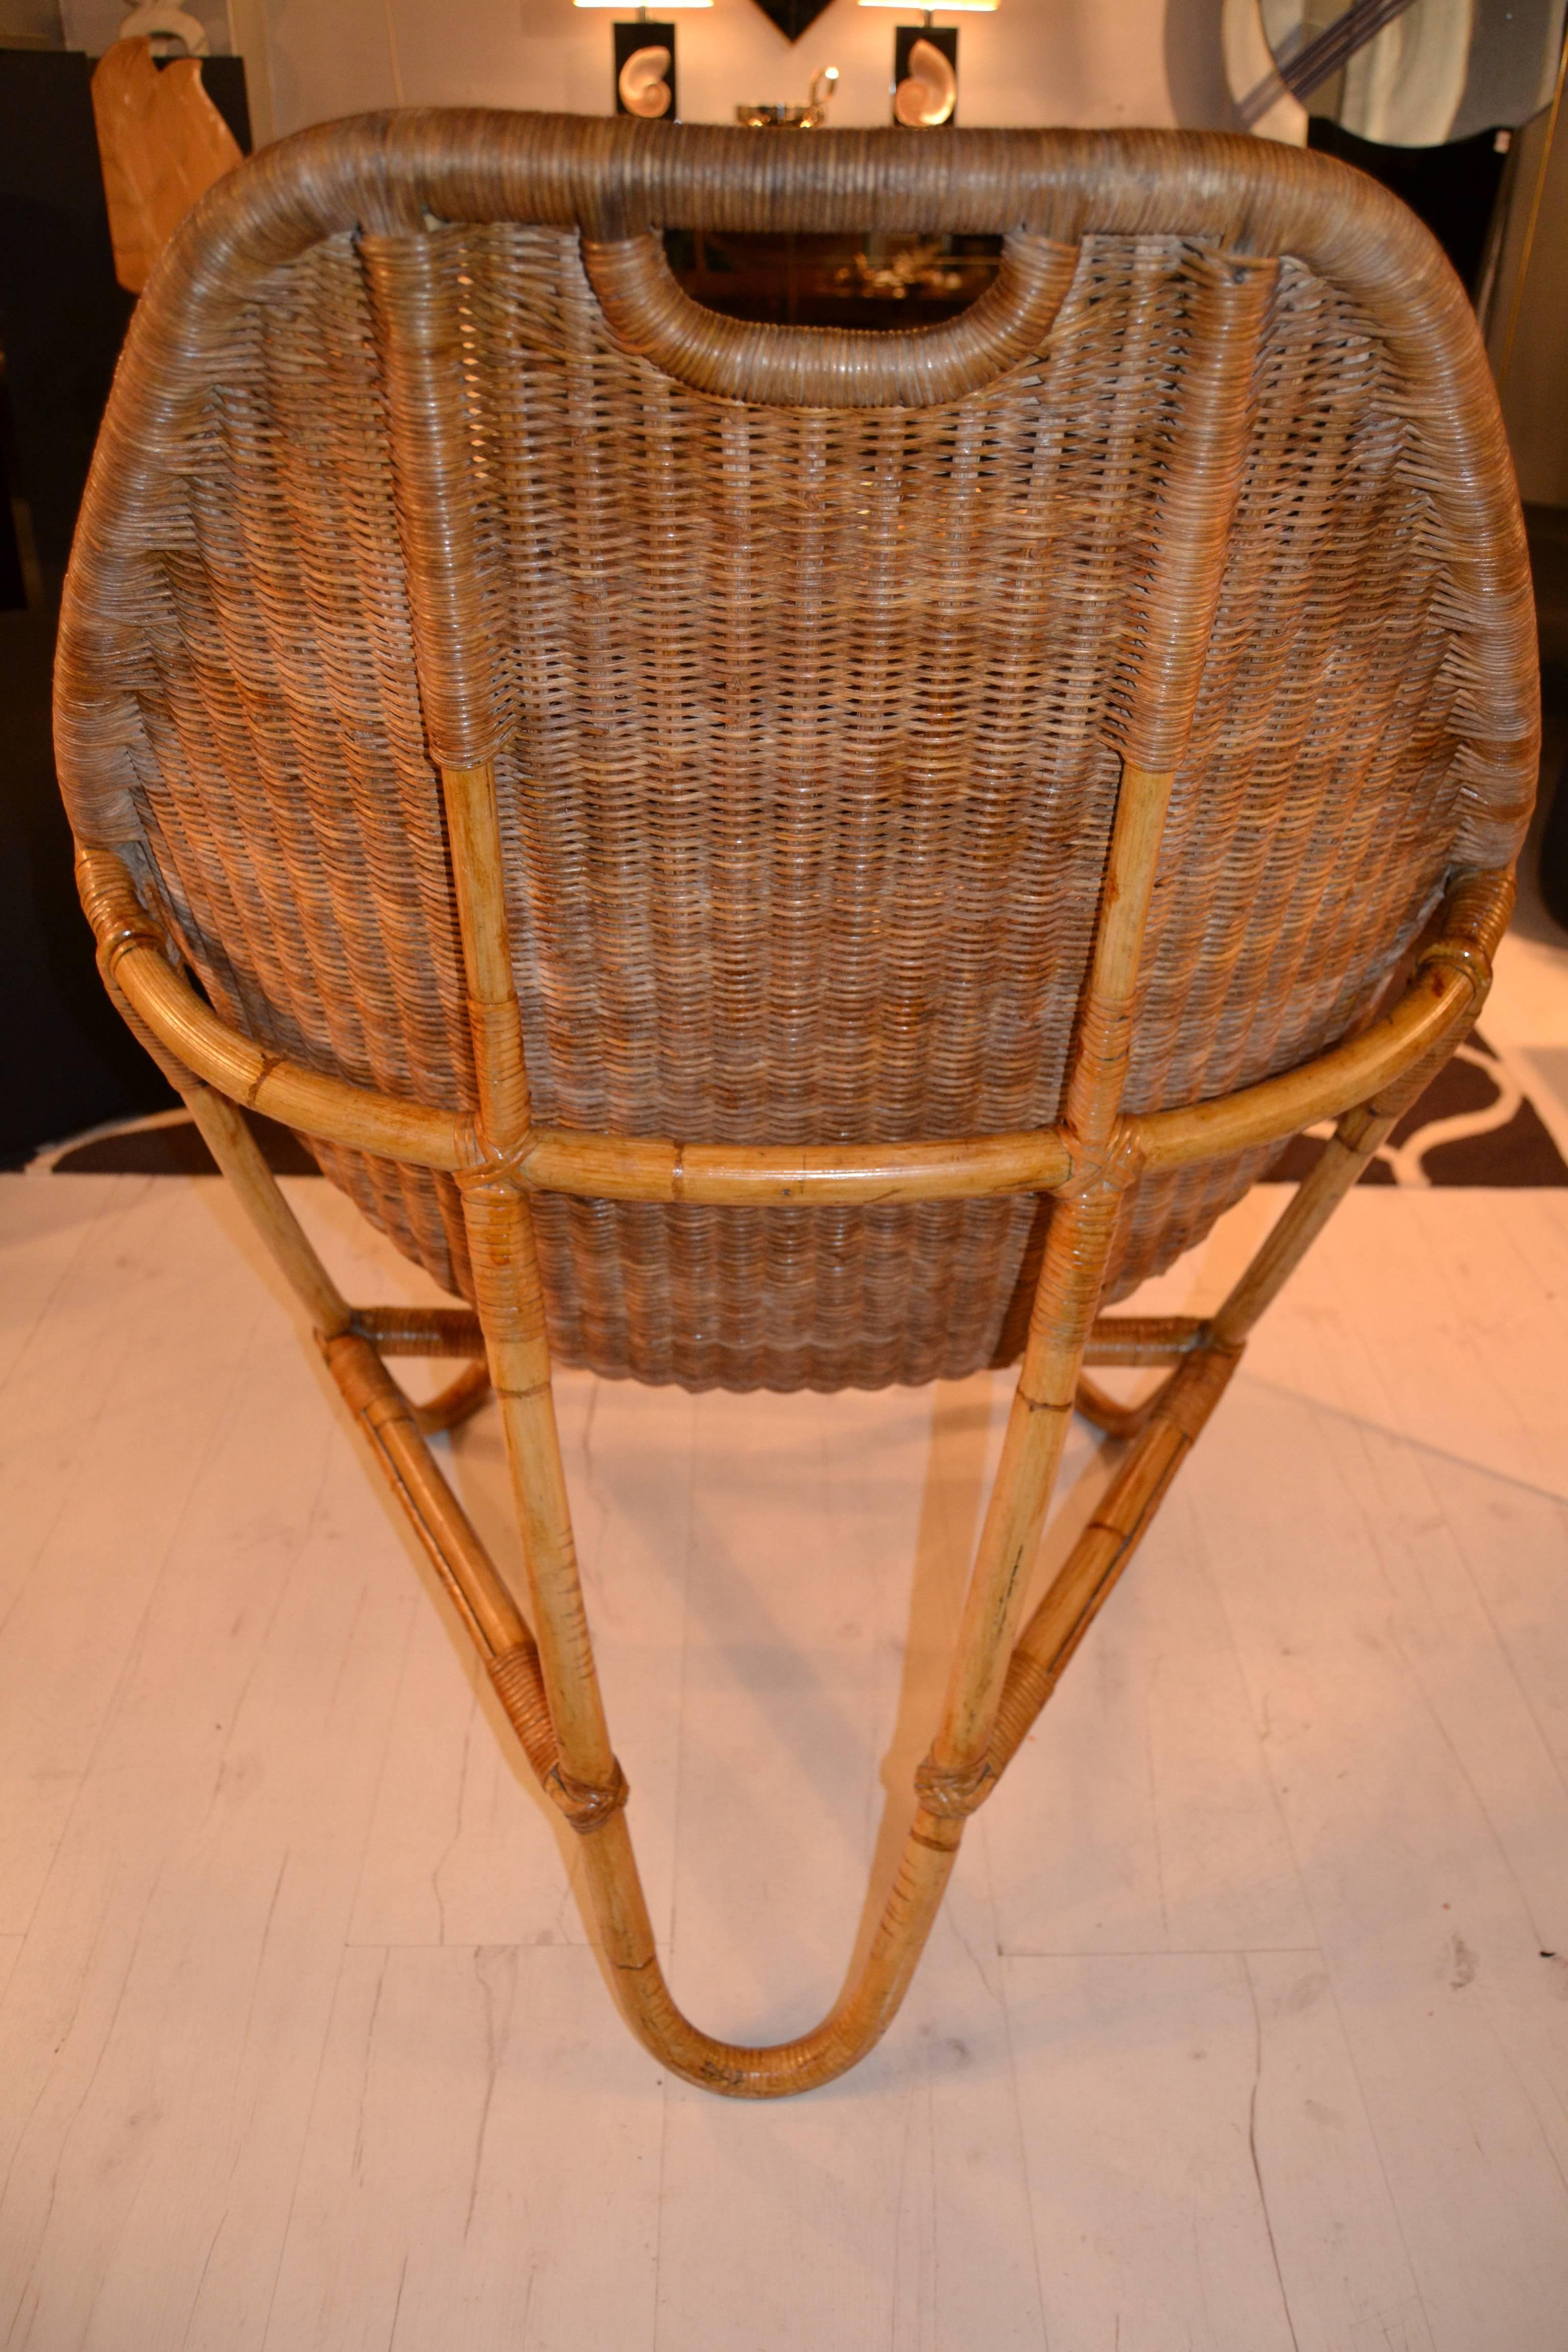 bamboo rattan chair